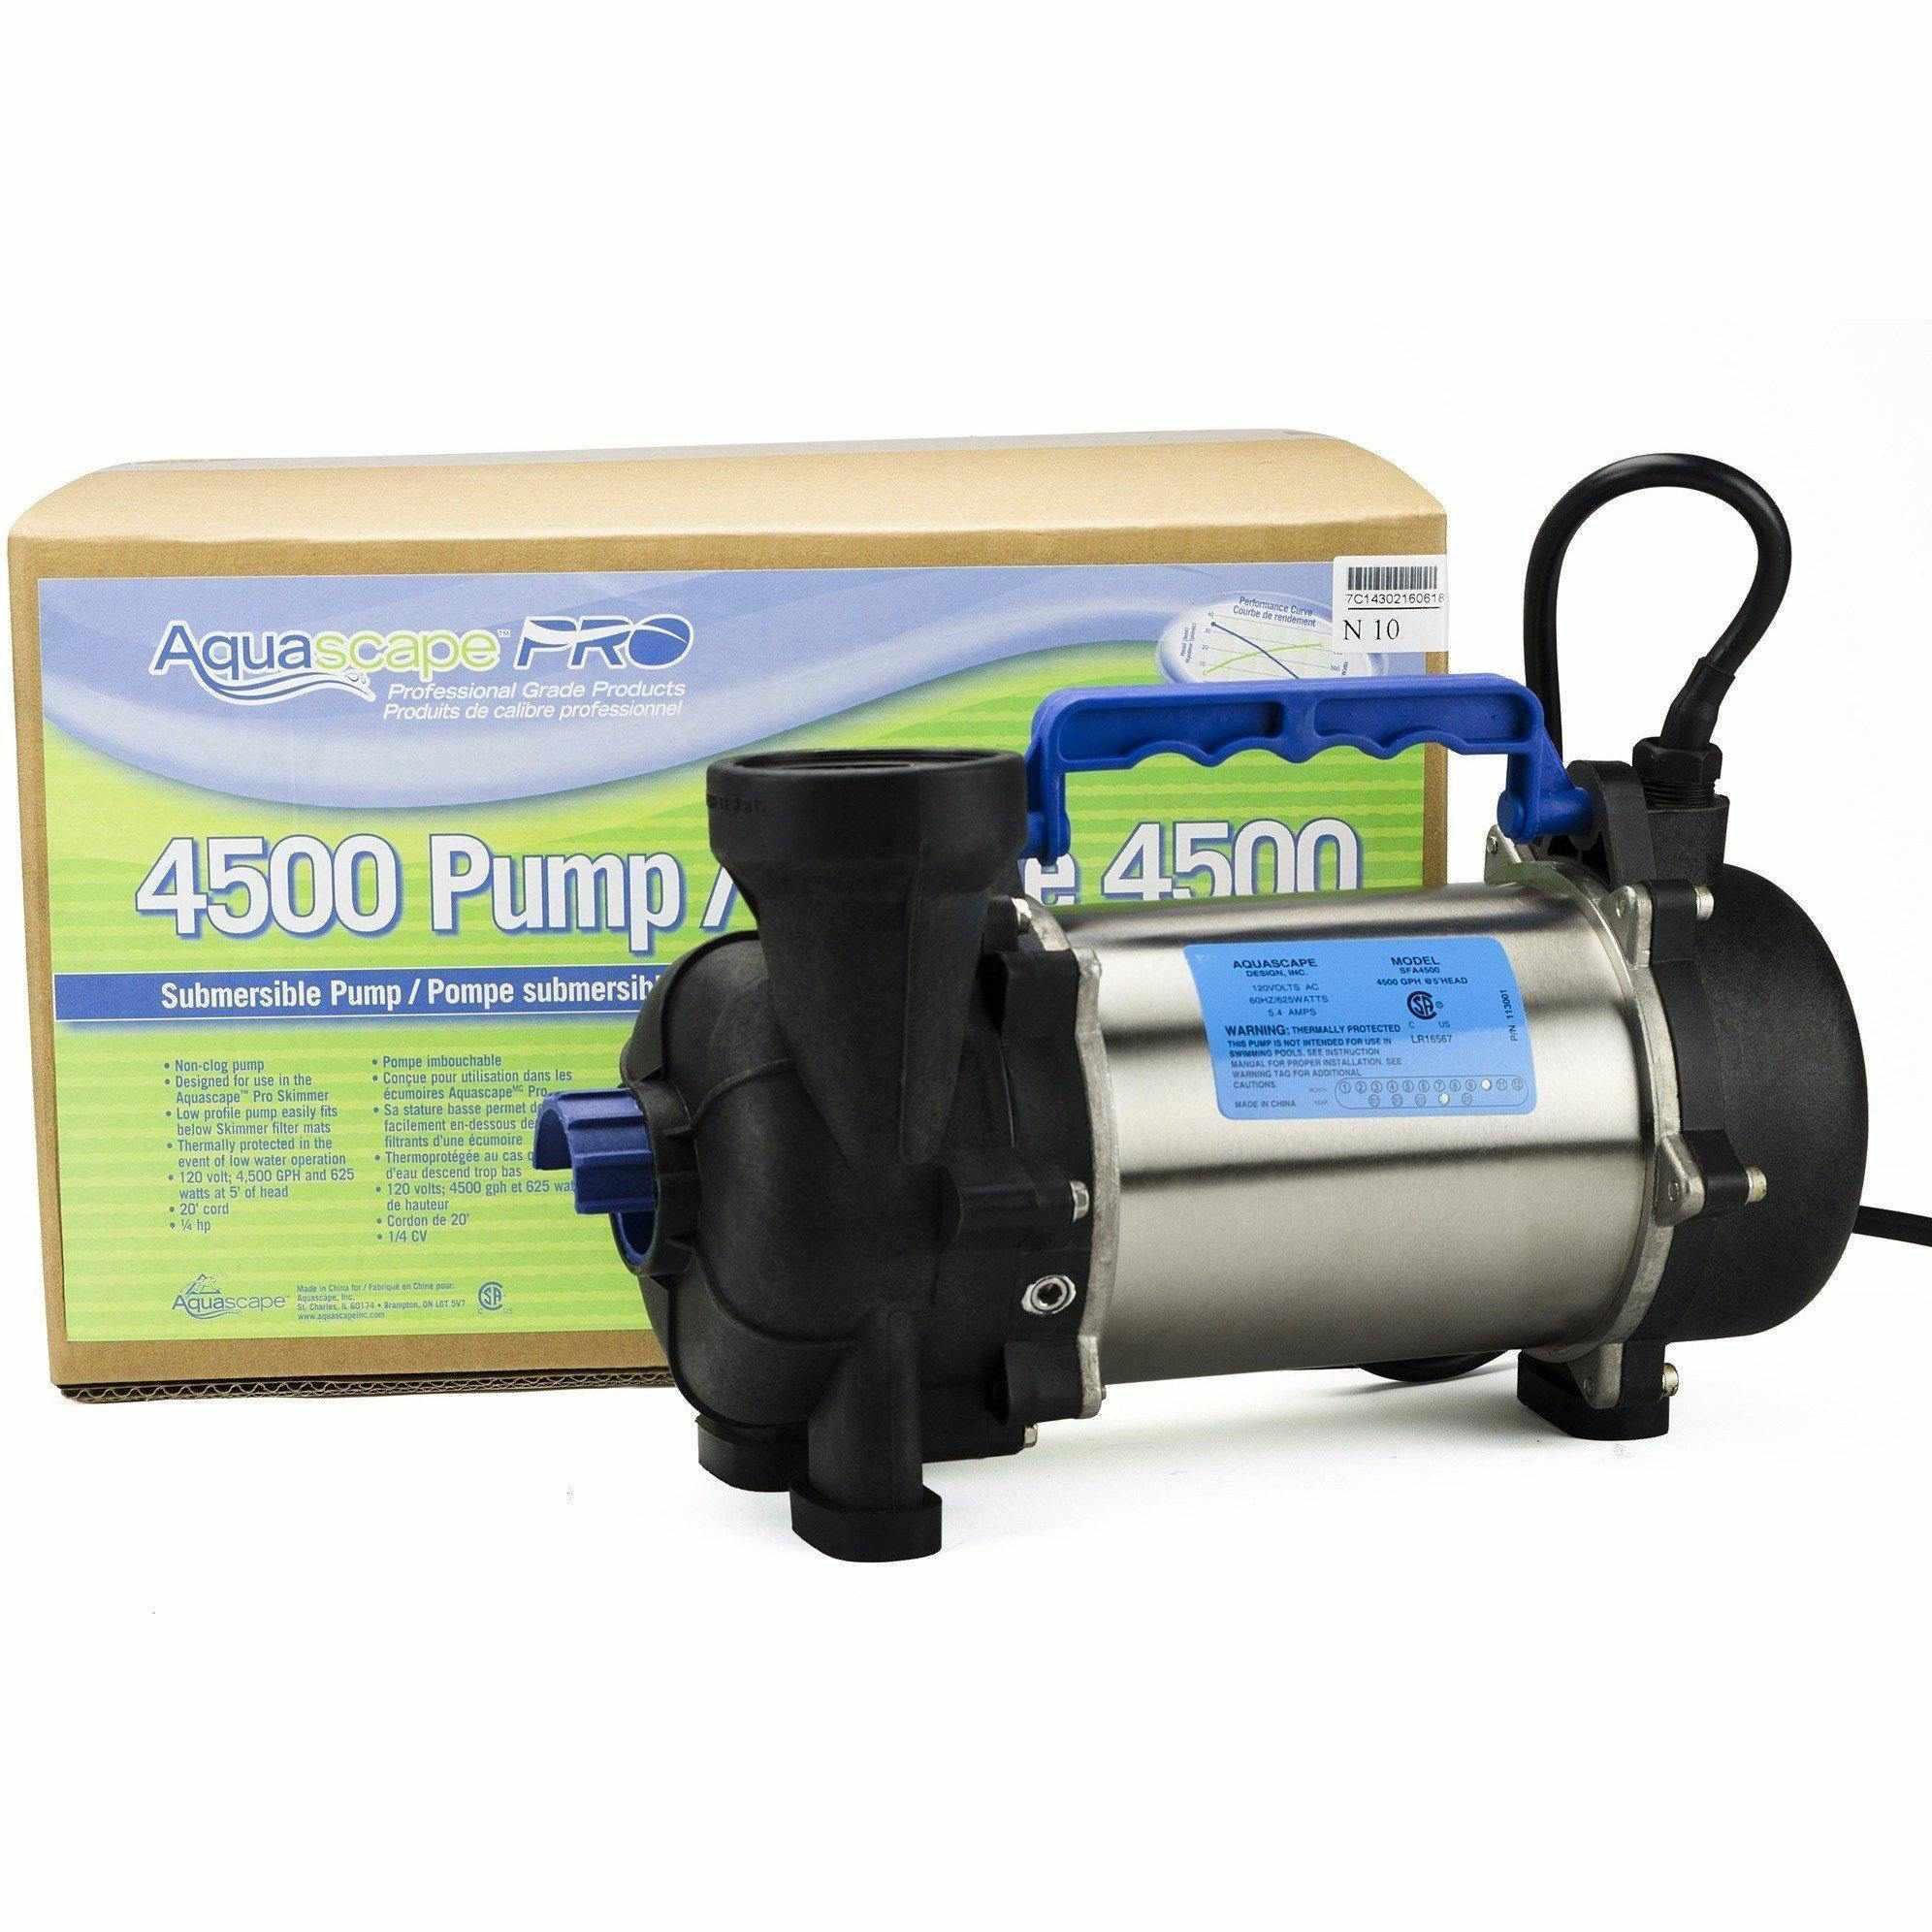 AquascapePRO 4500 Pump - Play It Koi